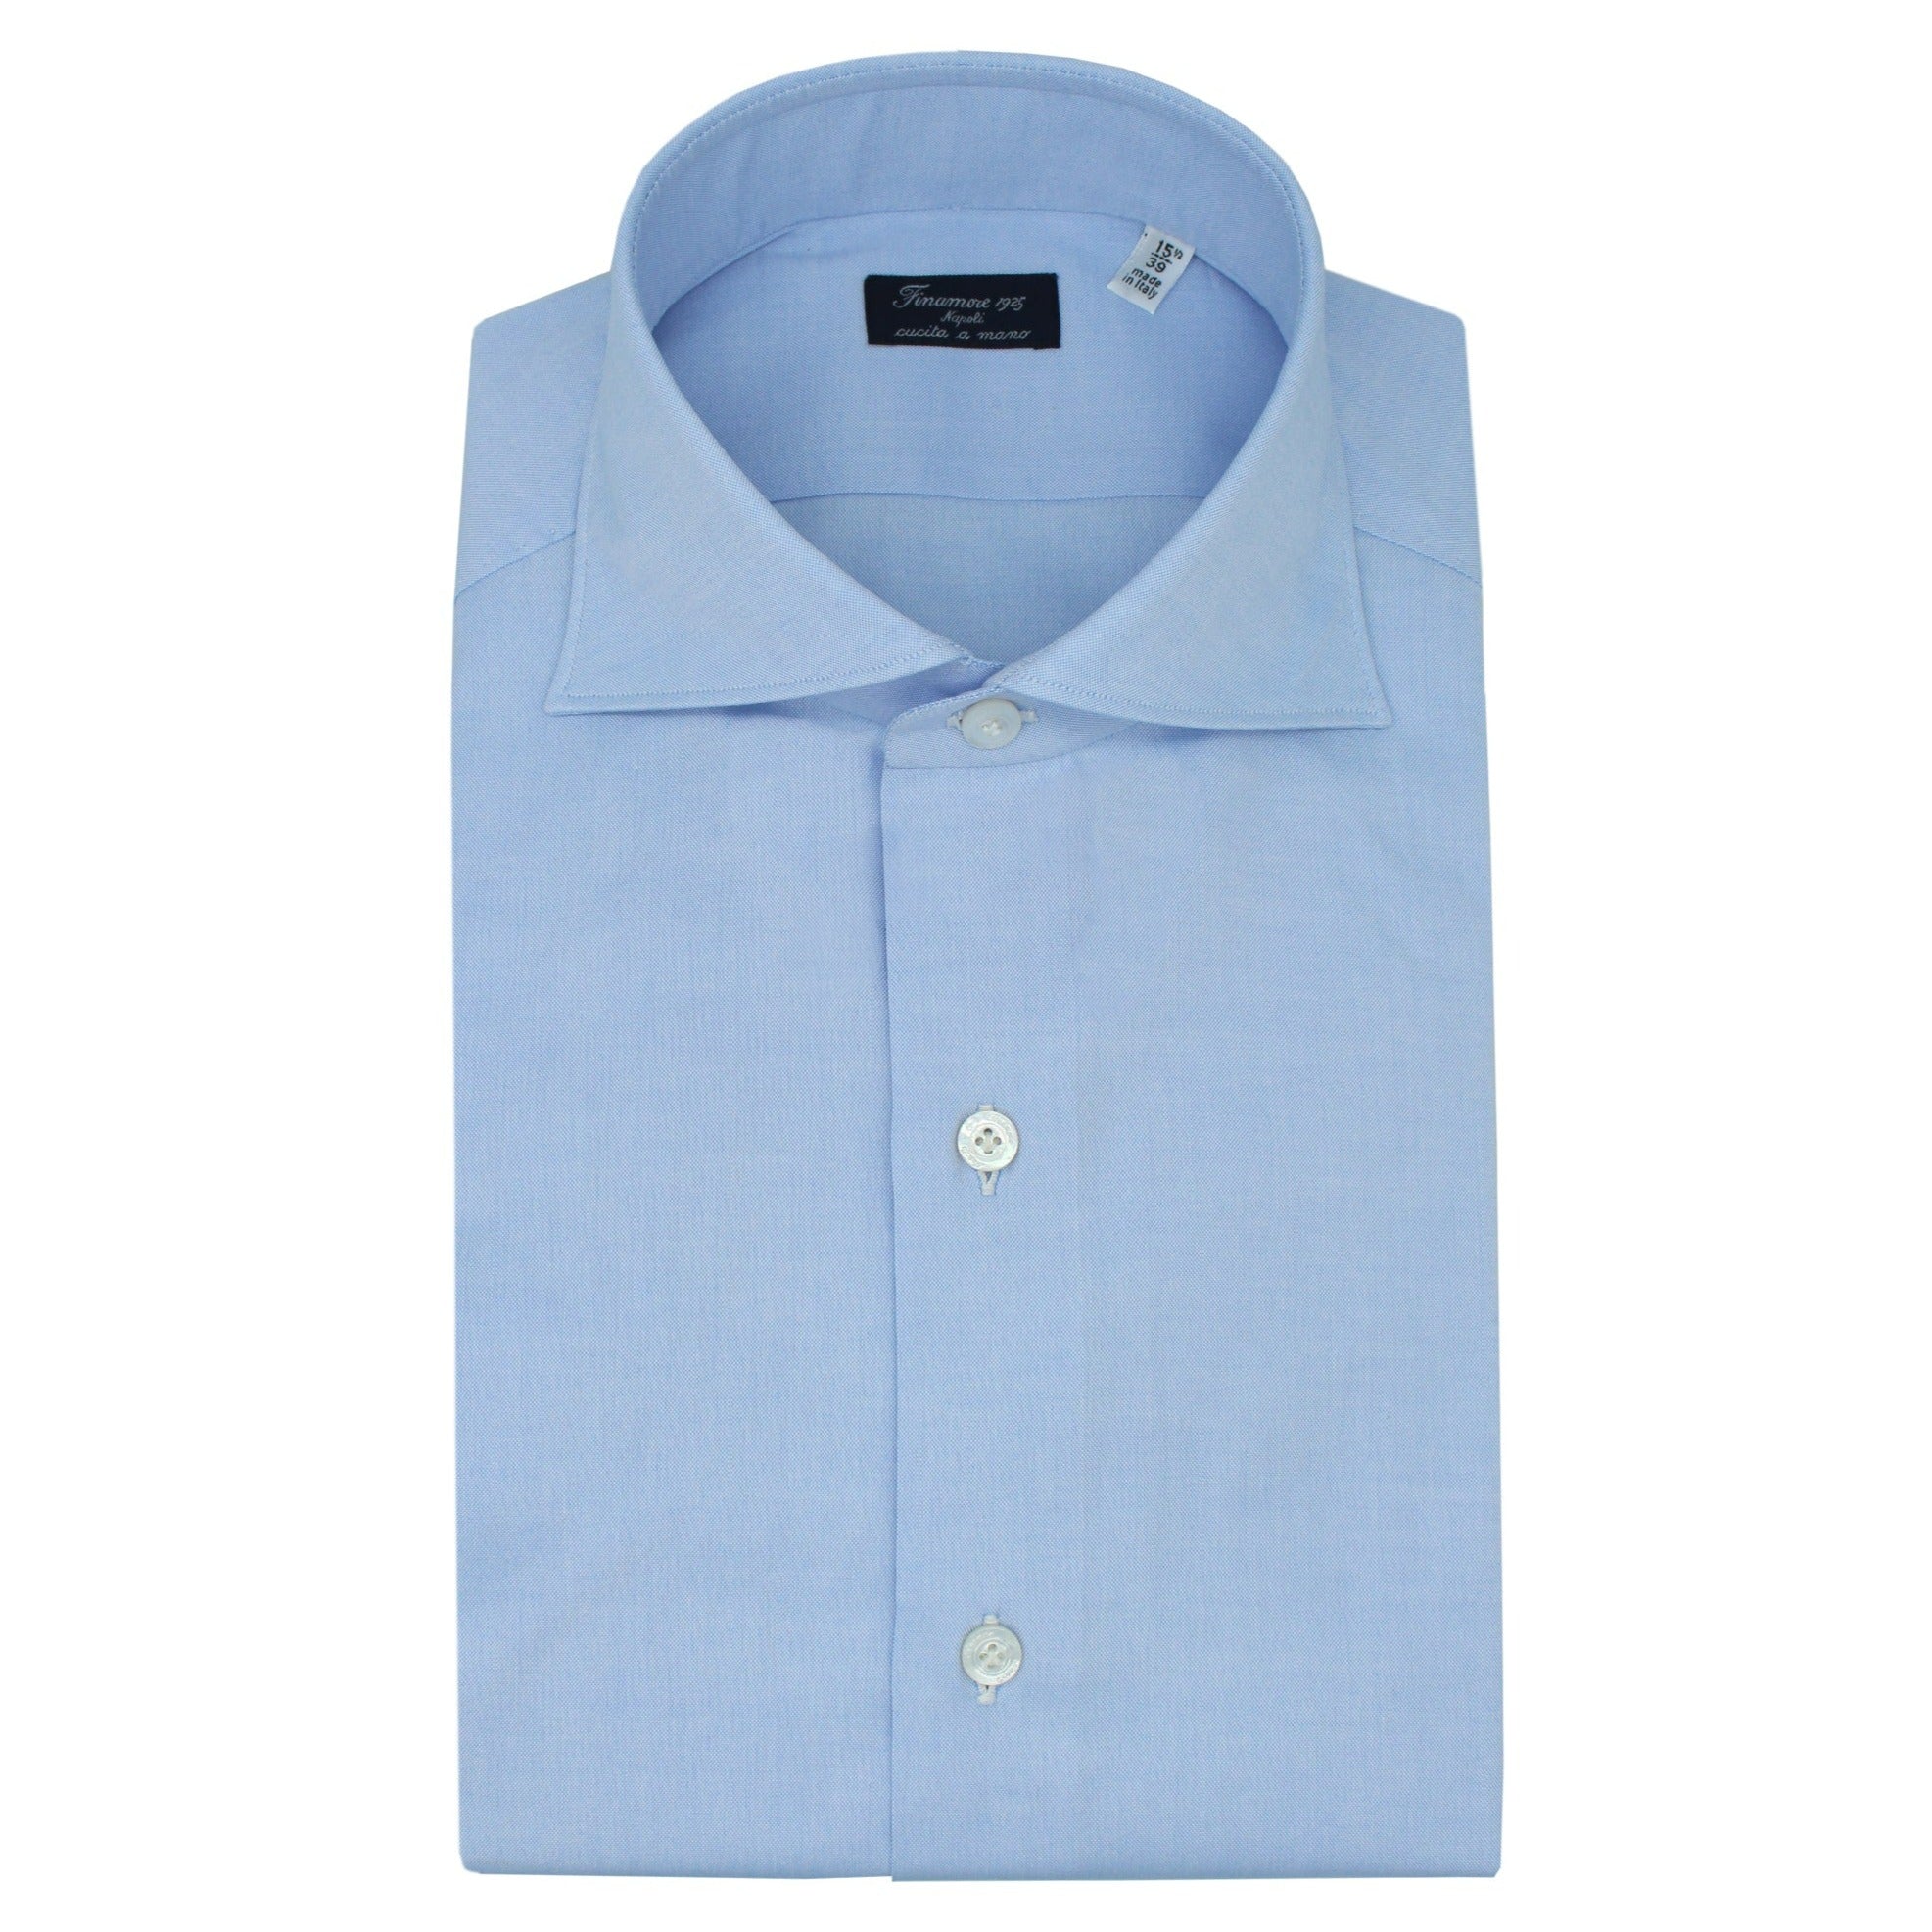 Milan slim fit shirt in light blue pin point cotton